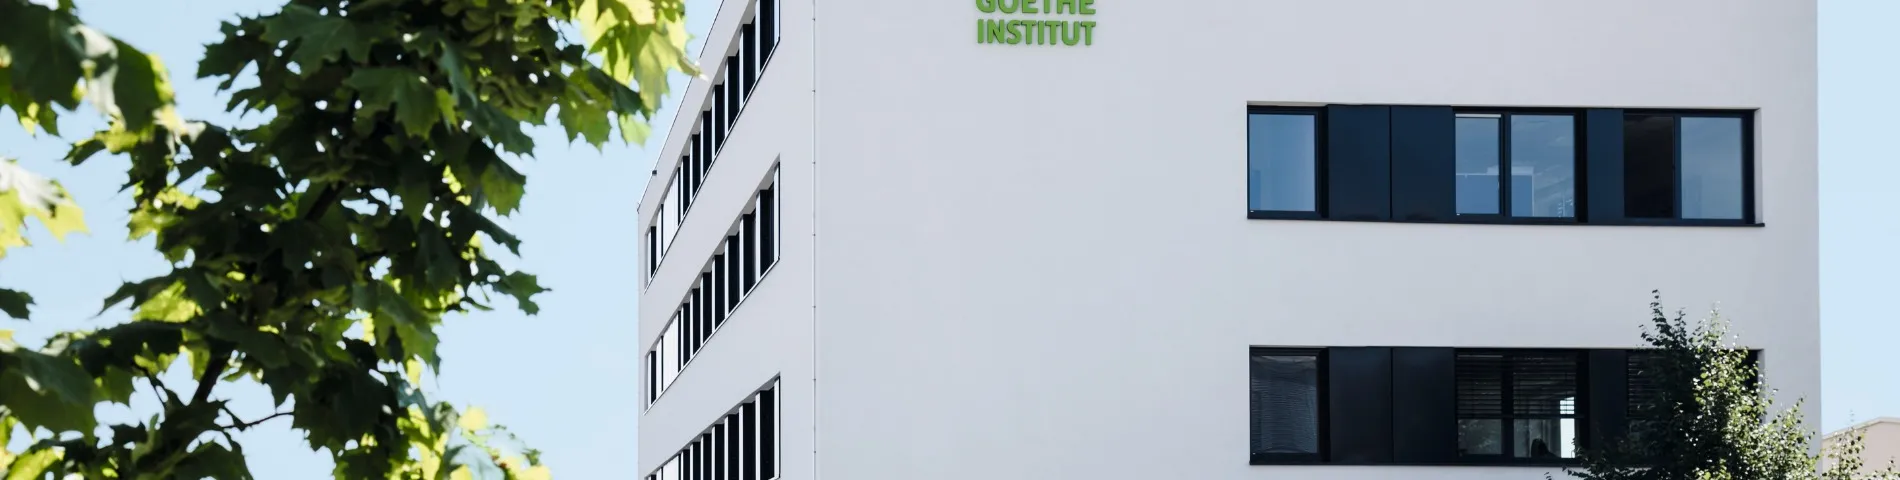 Goethe-Institut kép 1